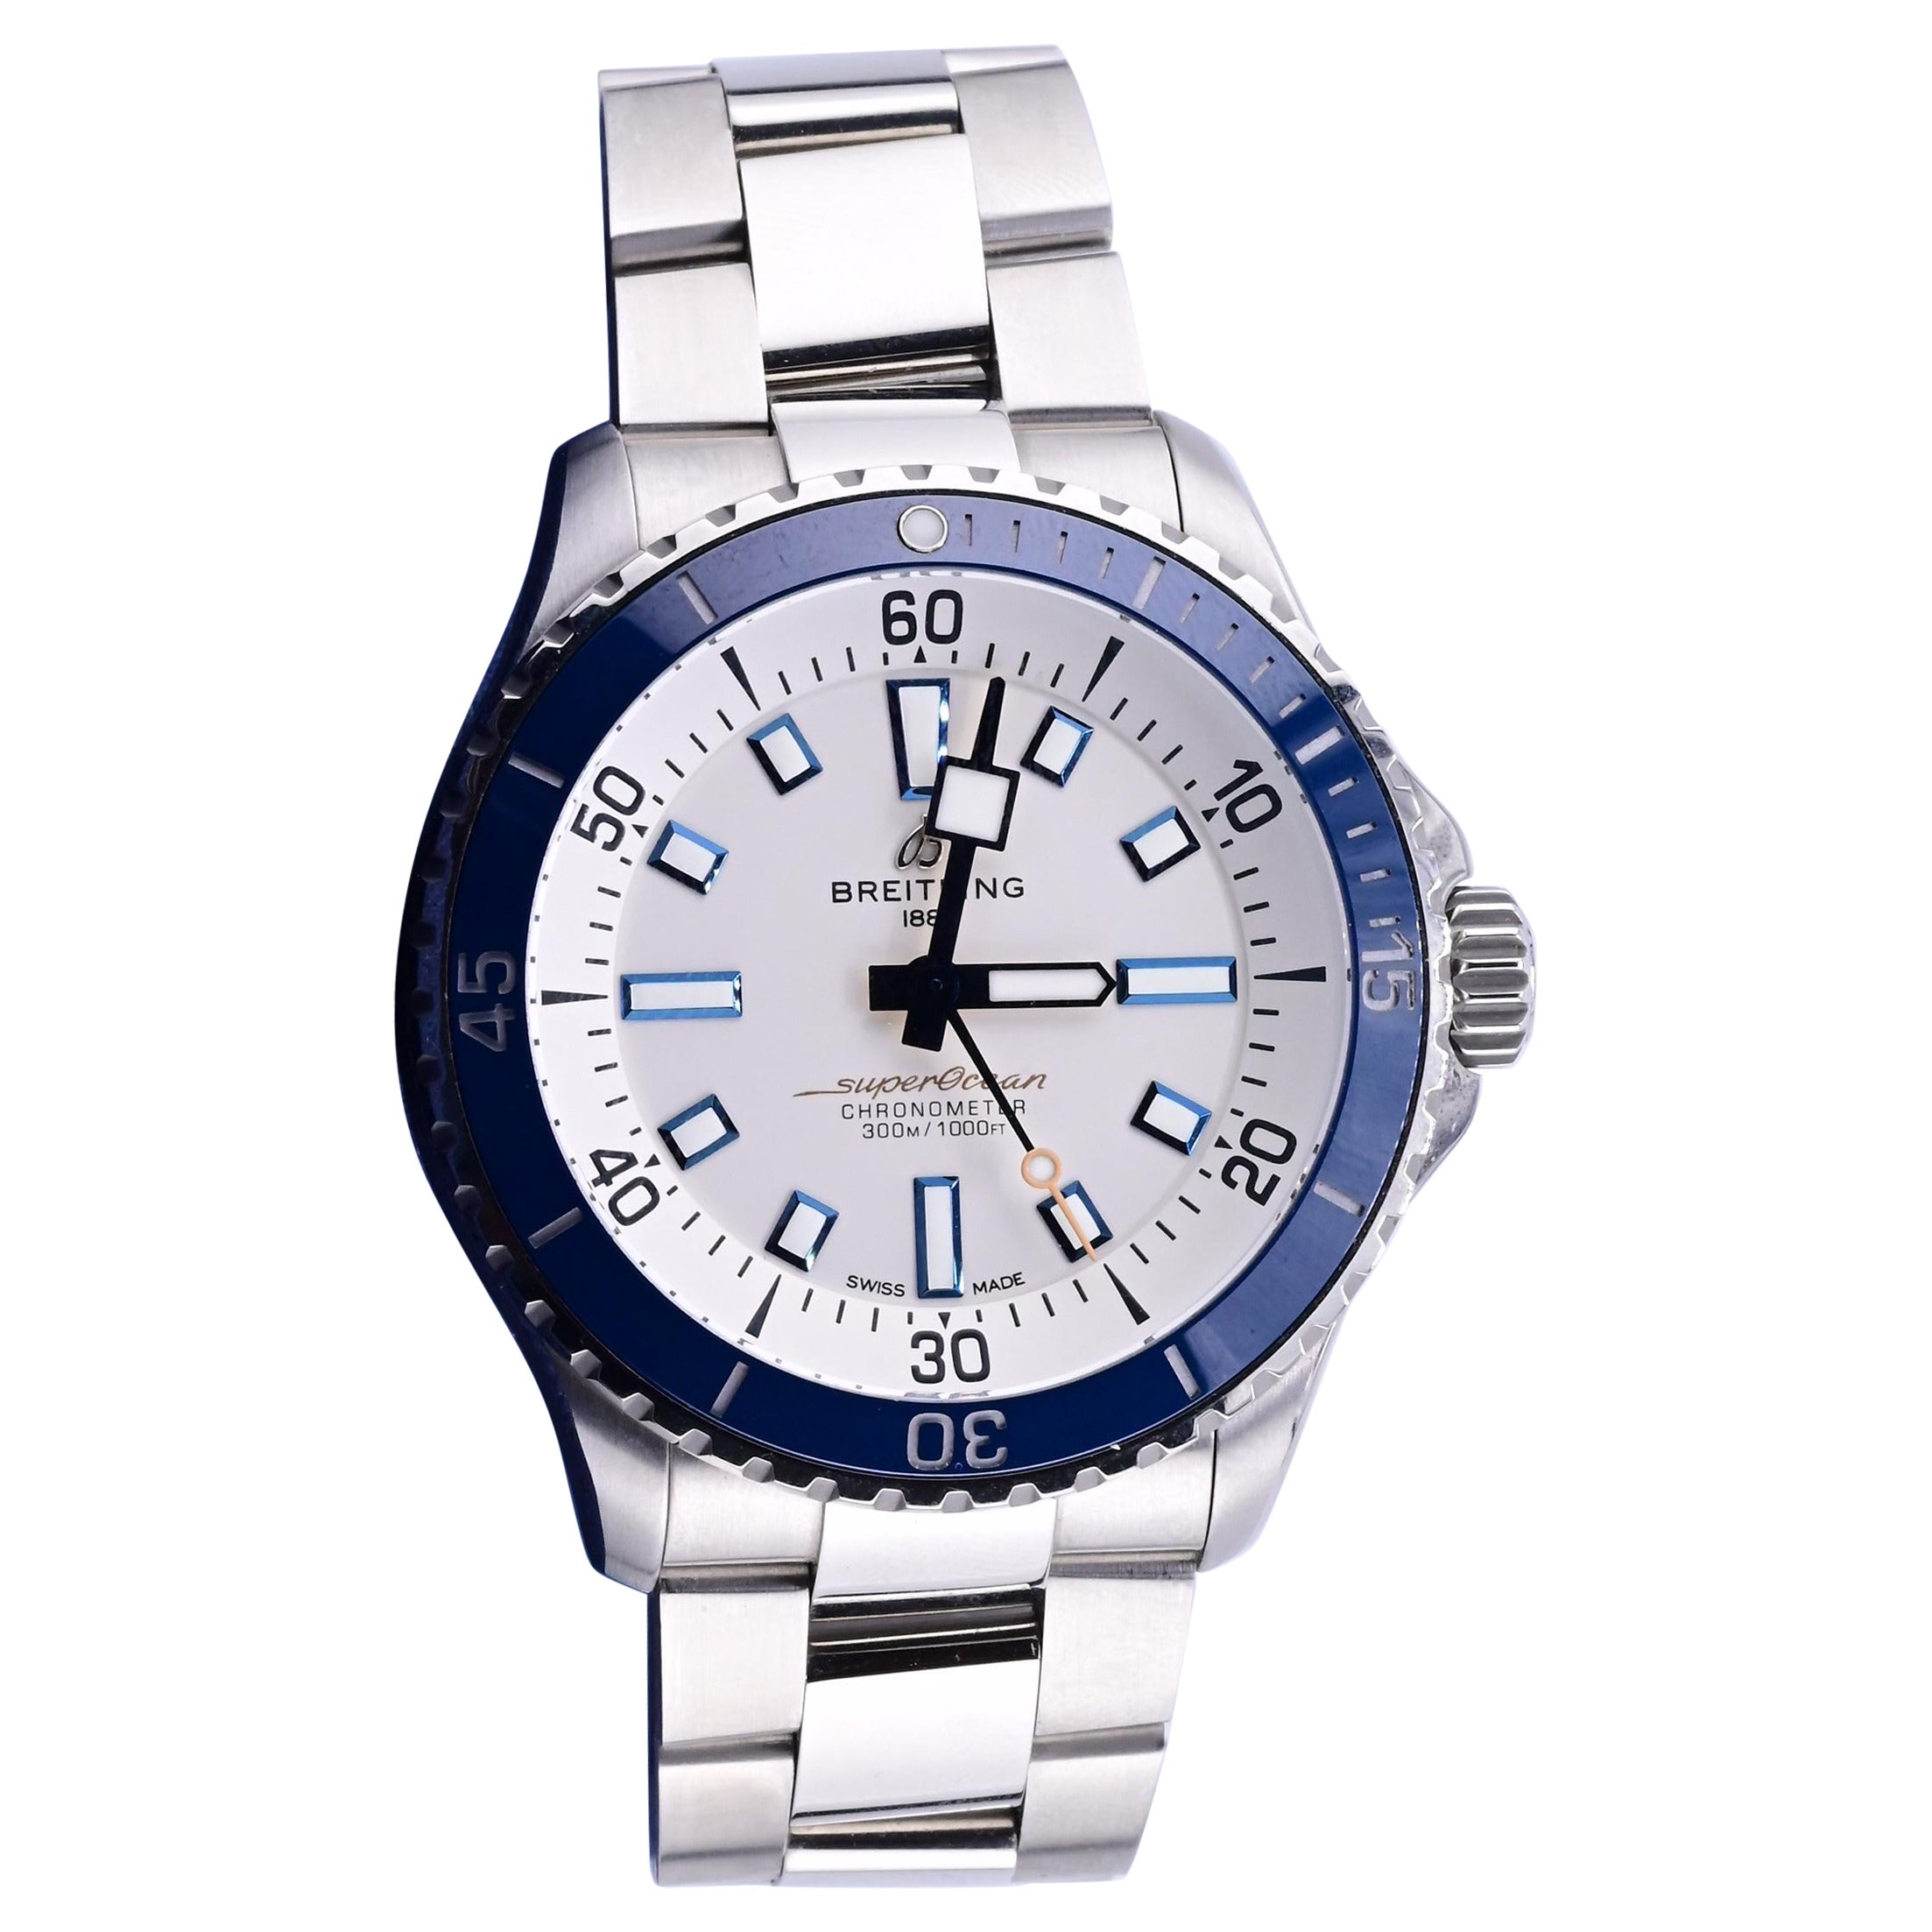 Excellent Condition Breitling Superocean Blue Men's Watch - A17375 Full Set 42MM